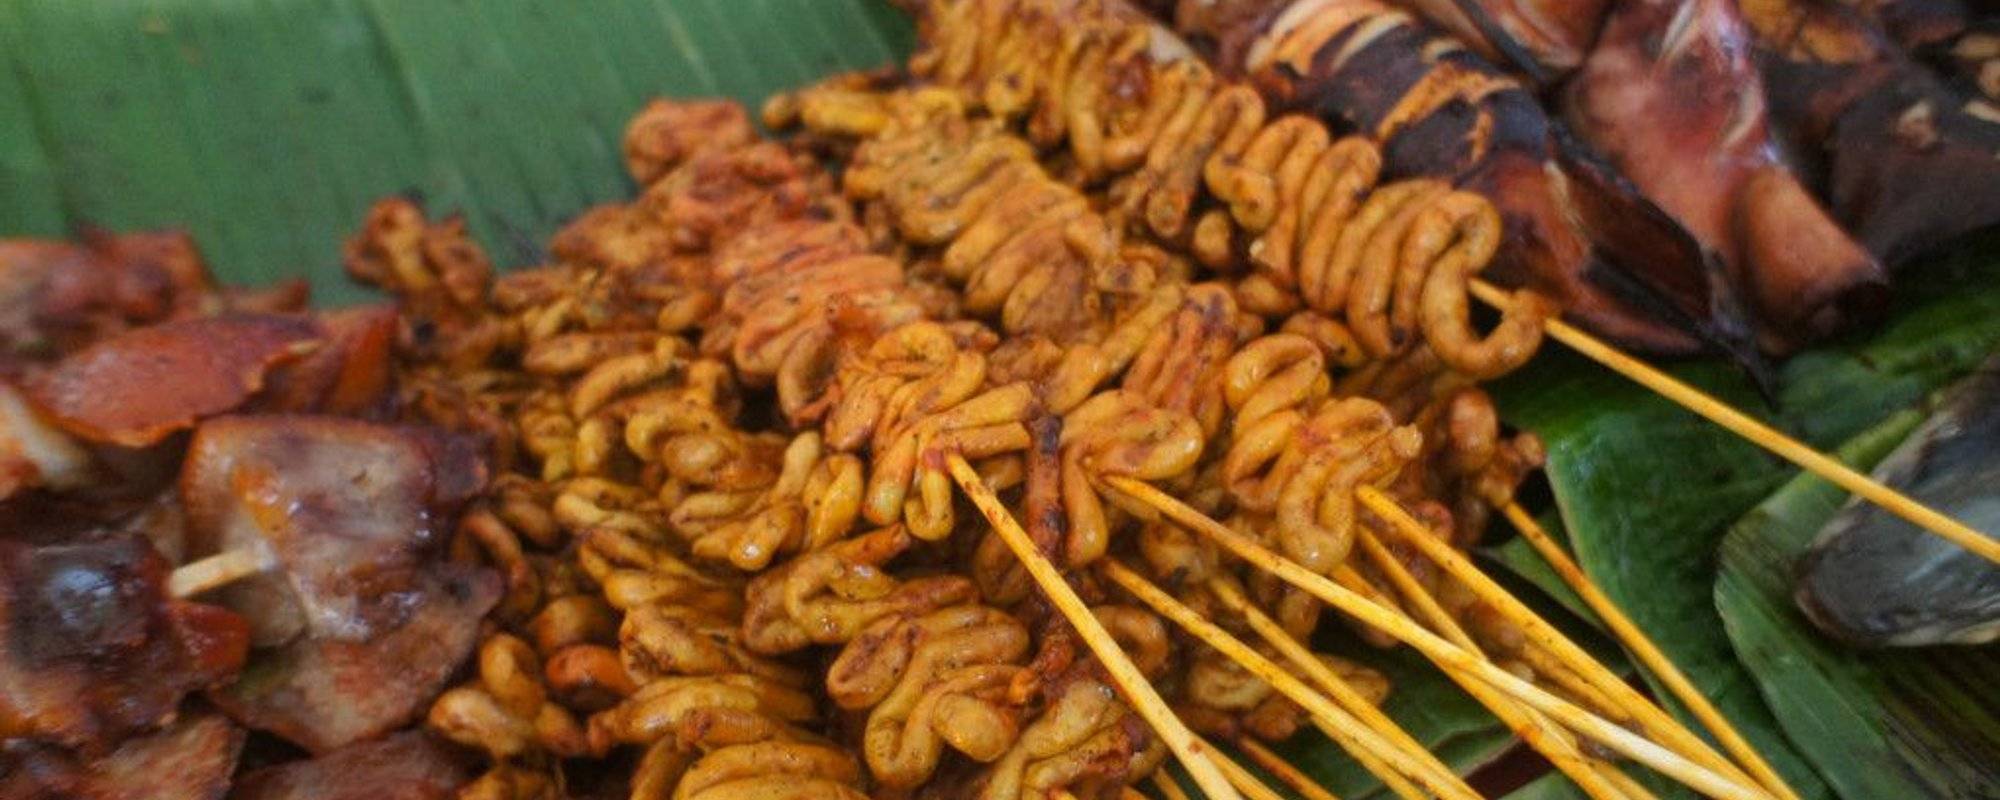 Food Trip: Affordable Pinoy Street Food at a Makati City Park